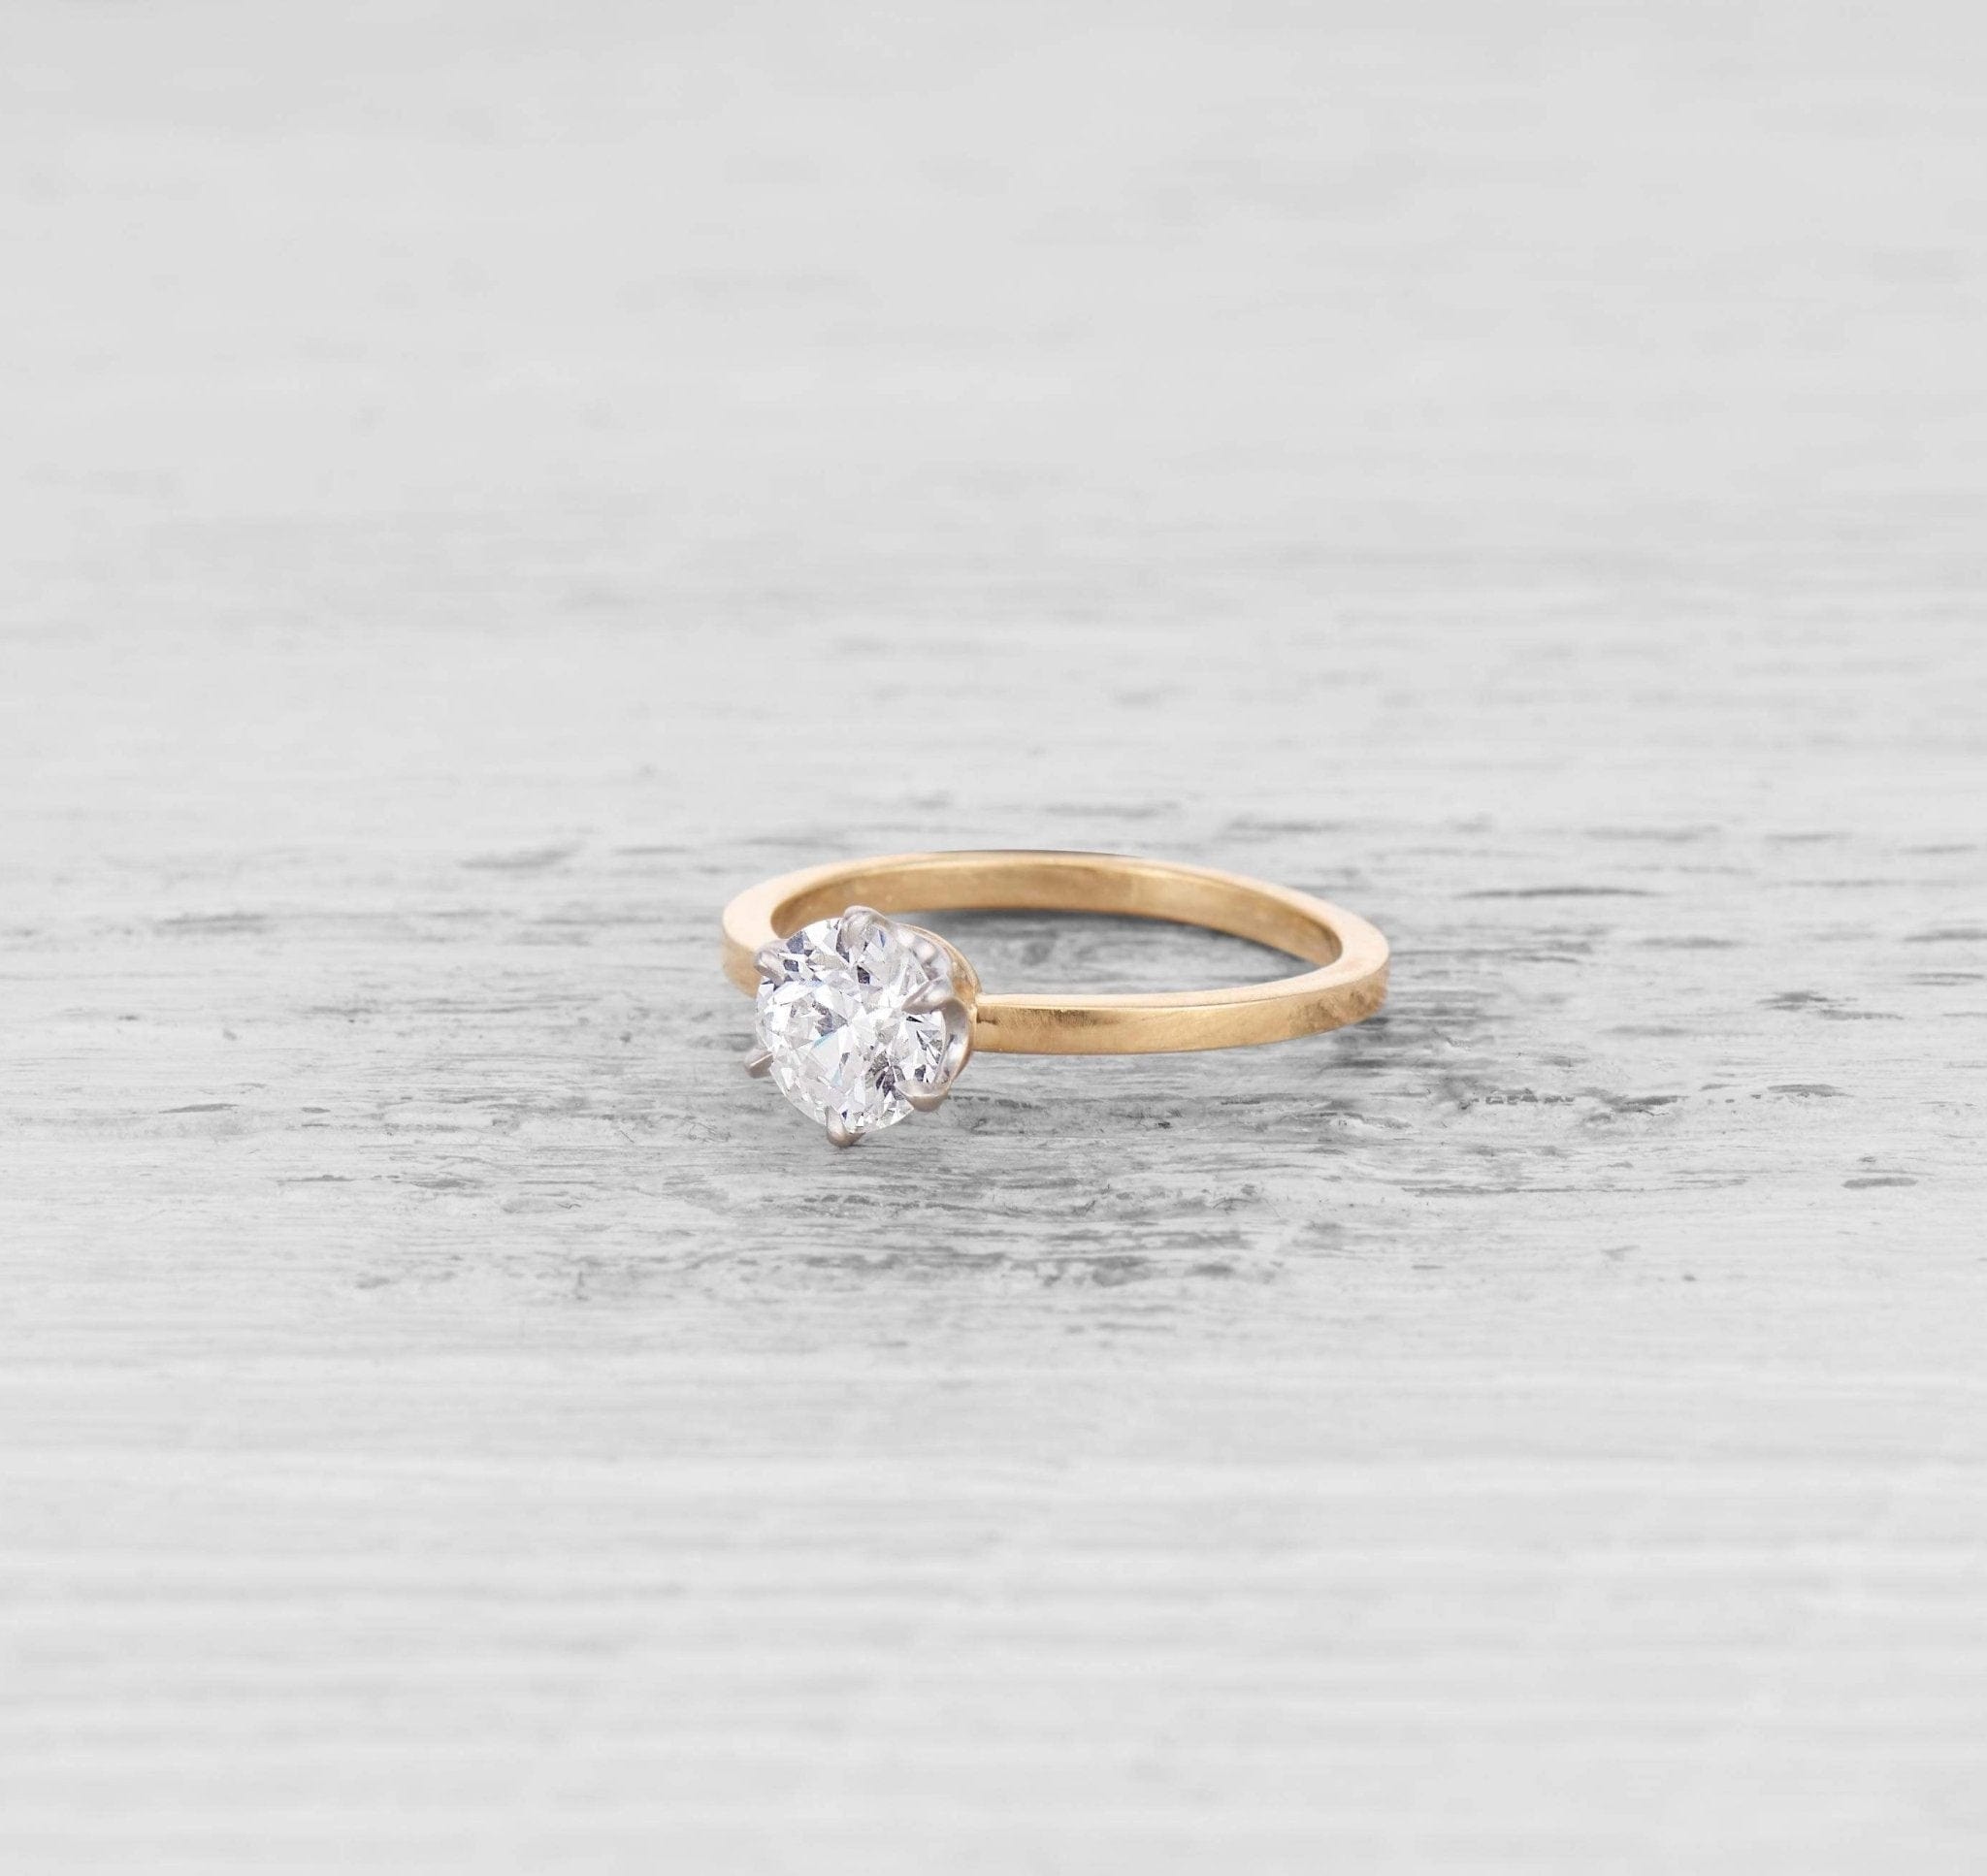 Aliss - Rough Diamond: Rough Diamond Engagement Ring | Ken & Dana